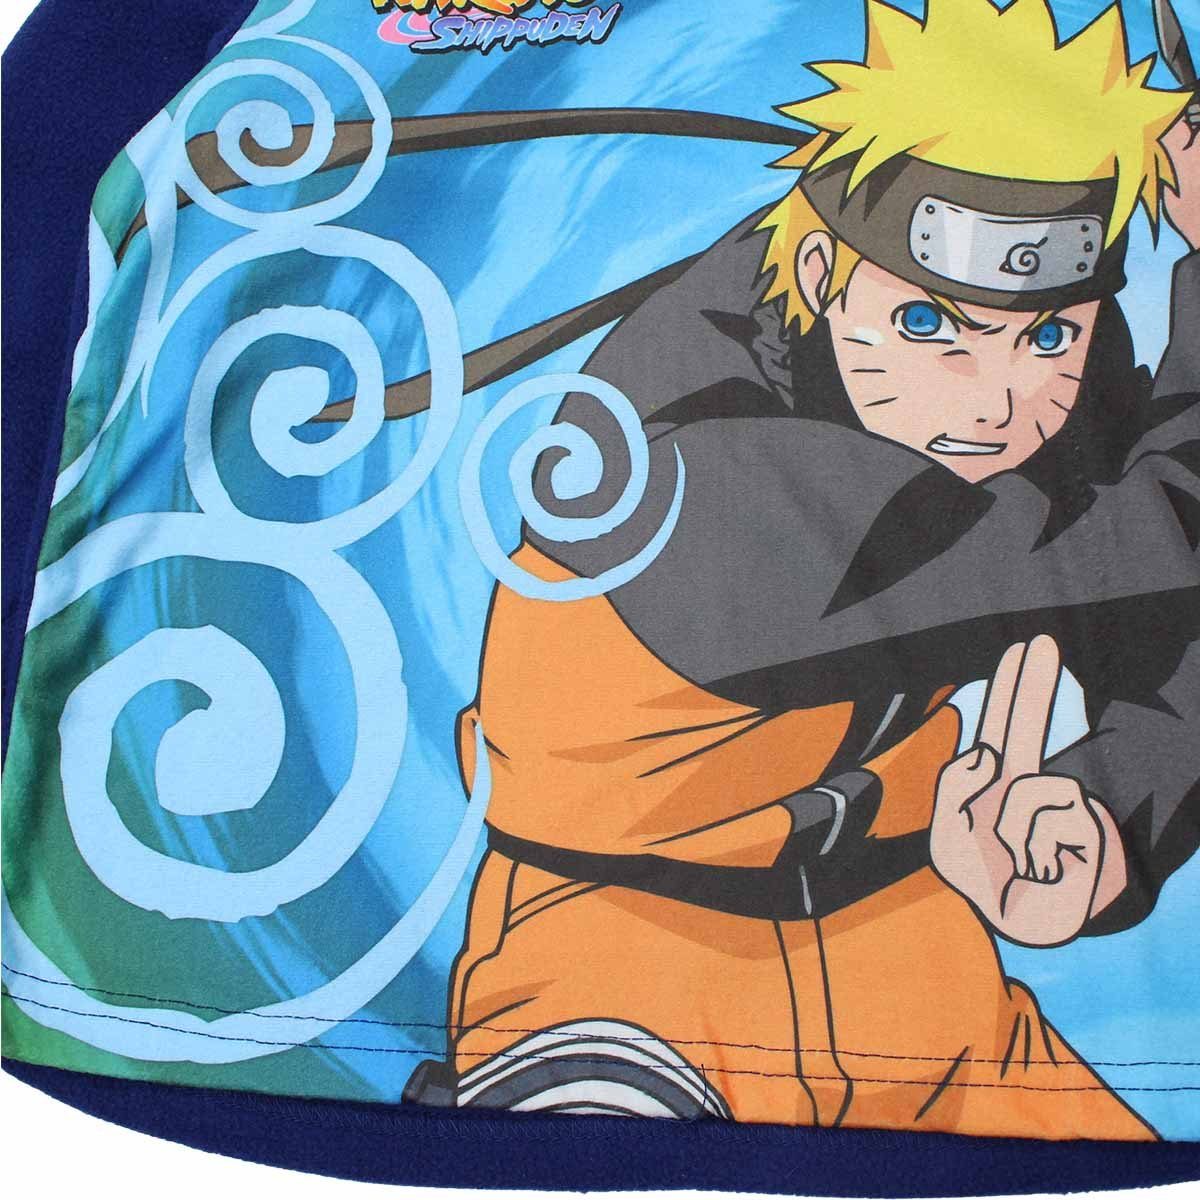 Naruto Jungen Gr. Pyjama Naruto Dunkelblau Langarm 152 Fleece bis 116 Schlafanzug Anime Shippuden